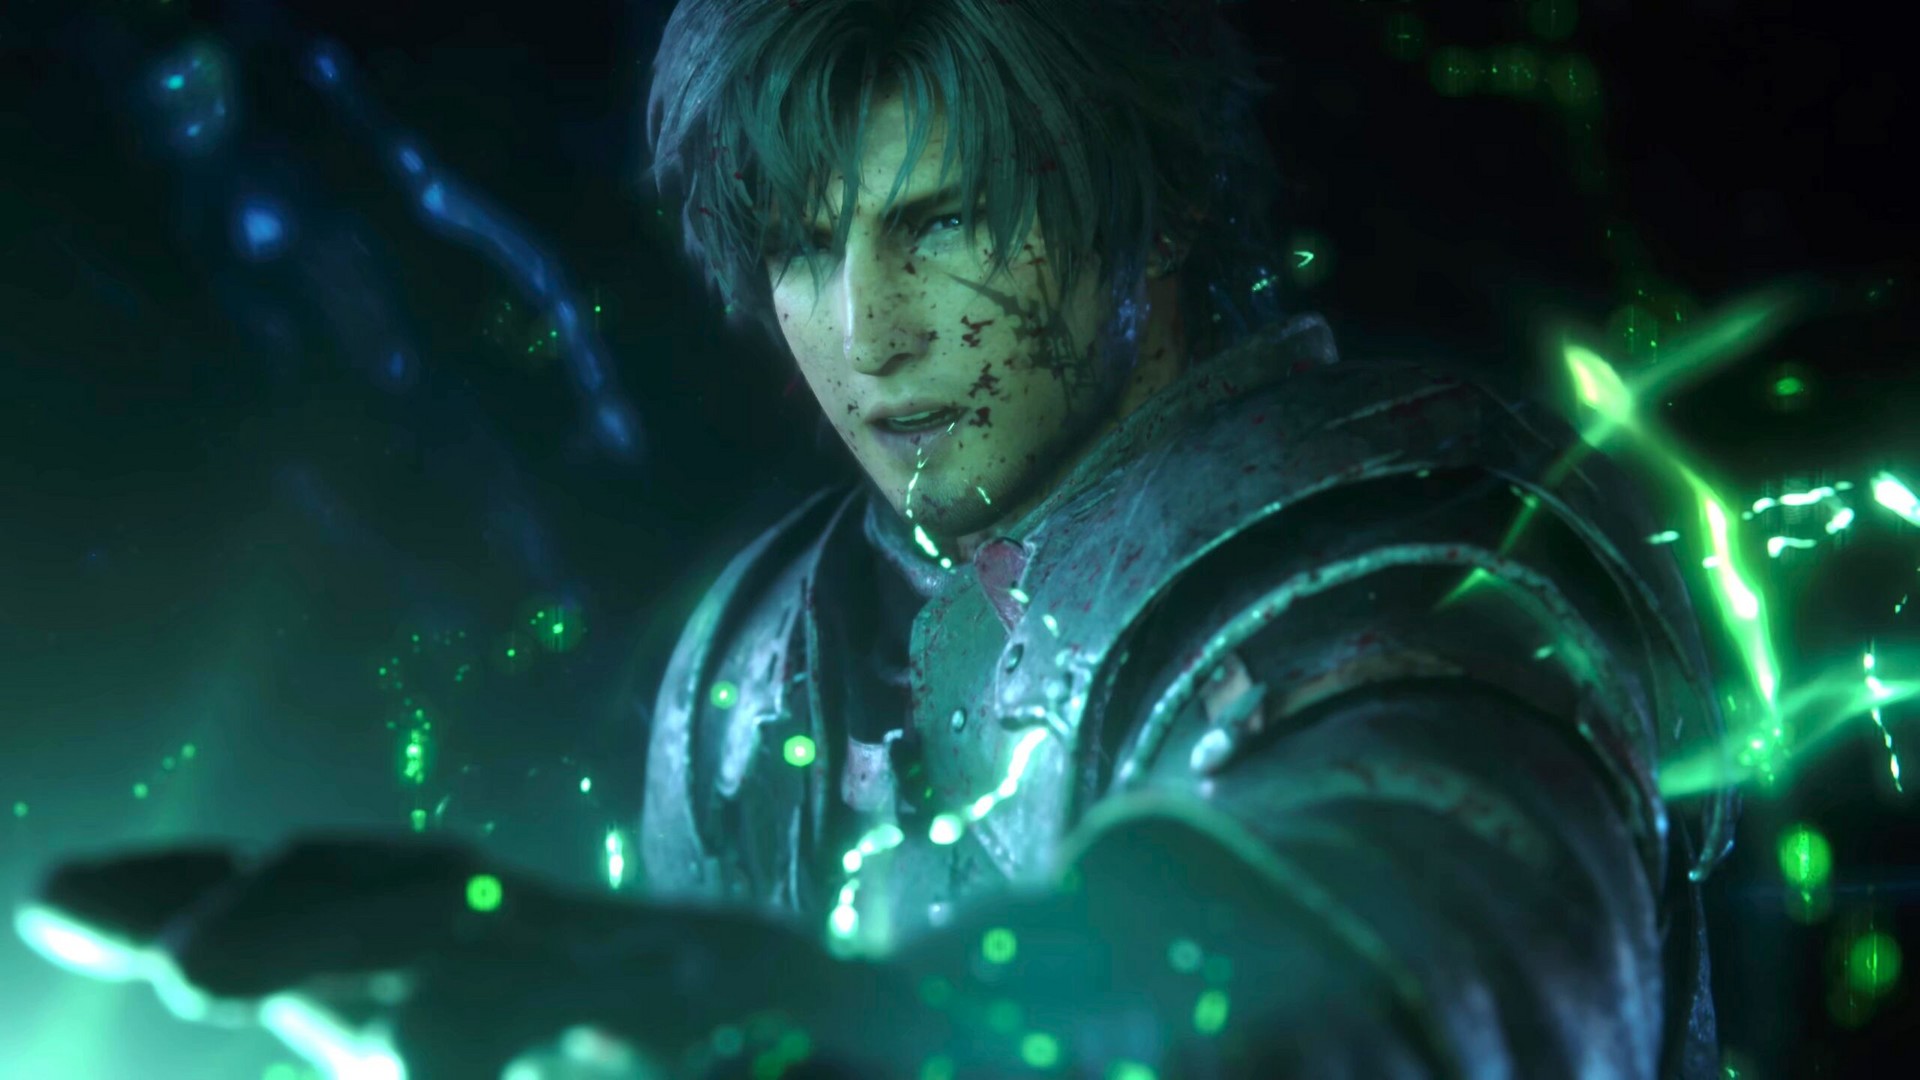 Stranger Of Paradise: Final Fantasy Origin Review - All Rage, No Soul -  Game Informer